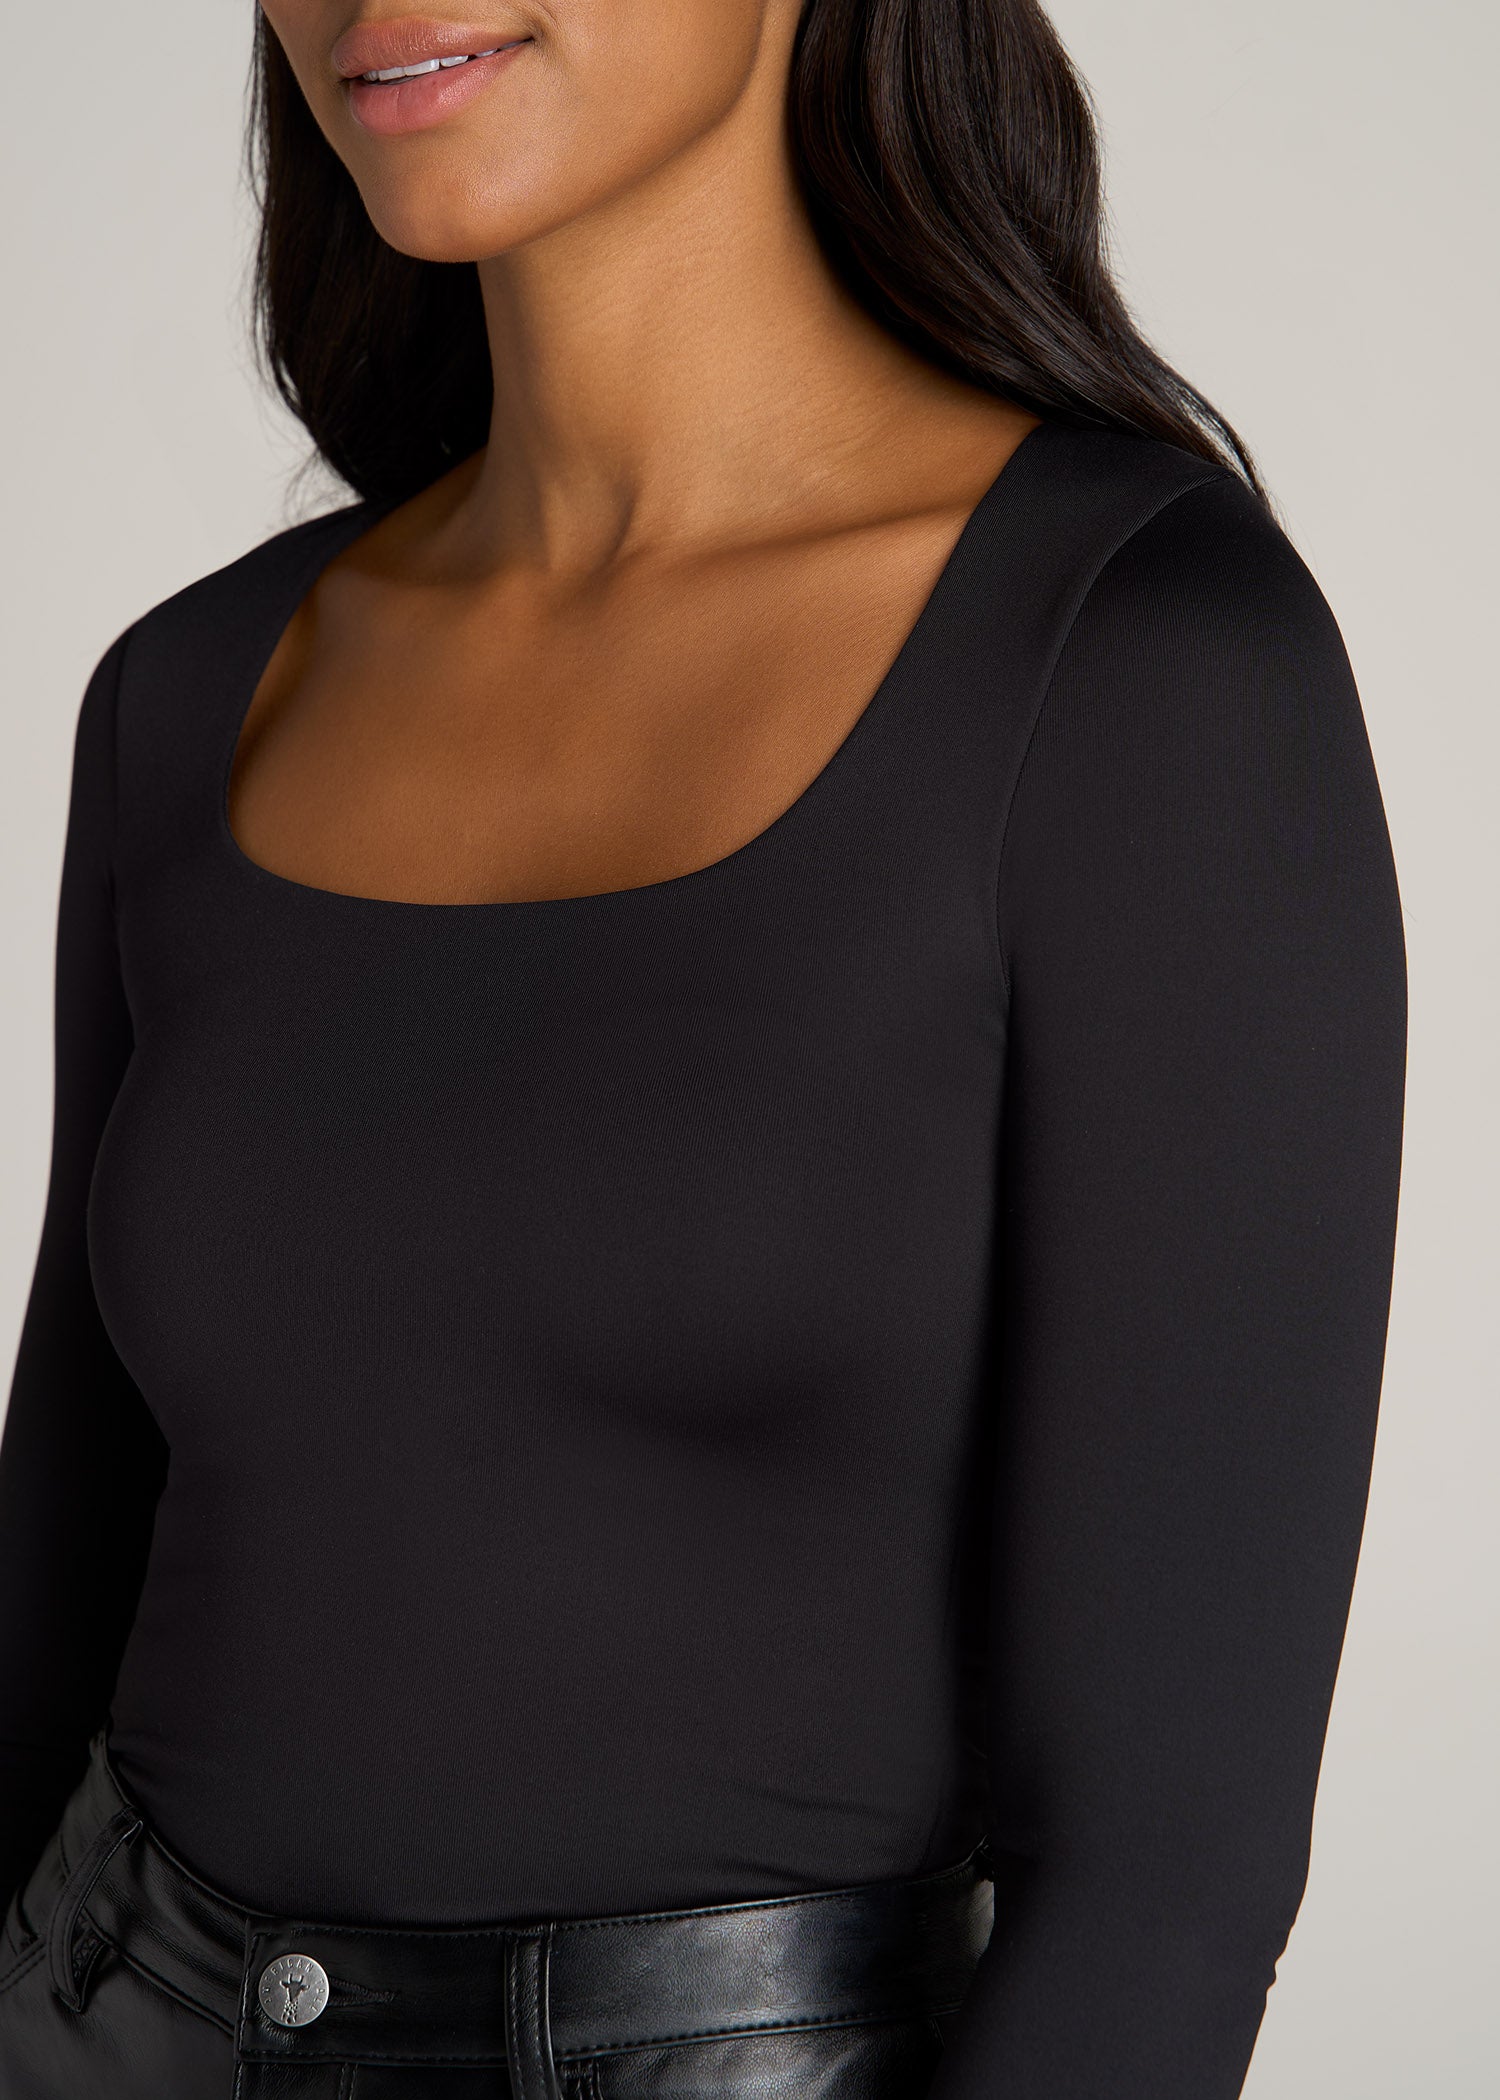 American Apparel Bodysuit Size XS Black Ribbed 2x2 Square Neck